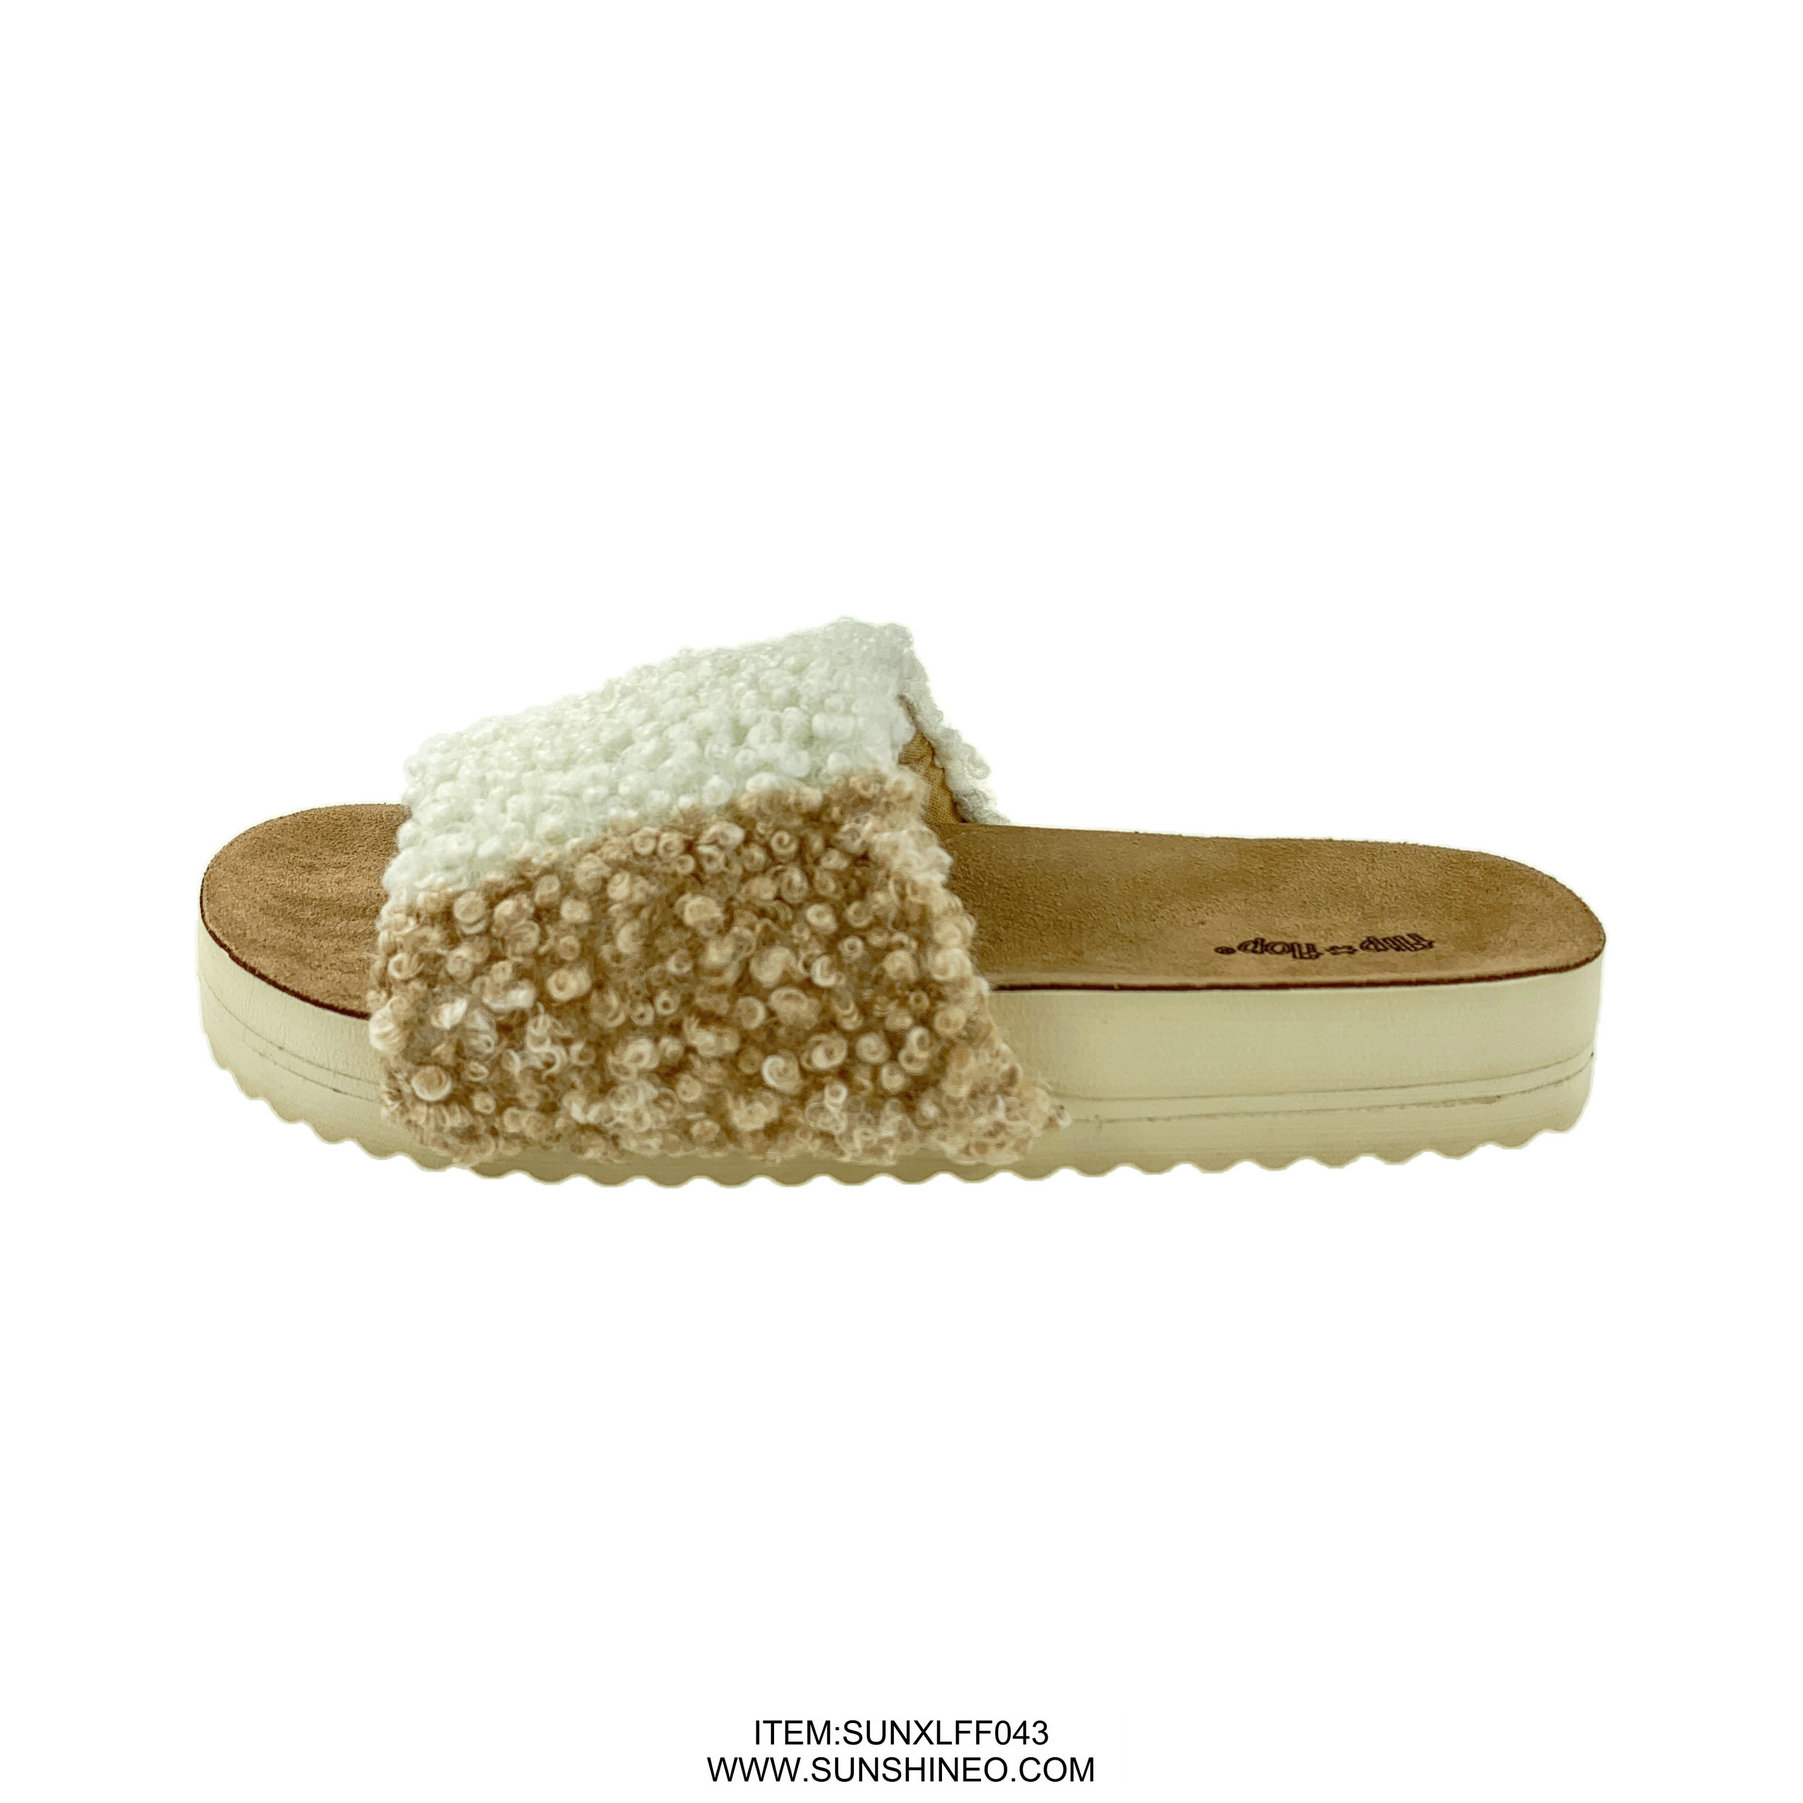 SUNXLFF043 fur flip flop sandals winter slippers